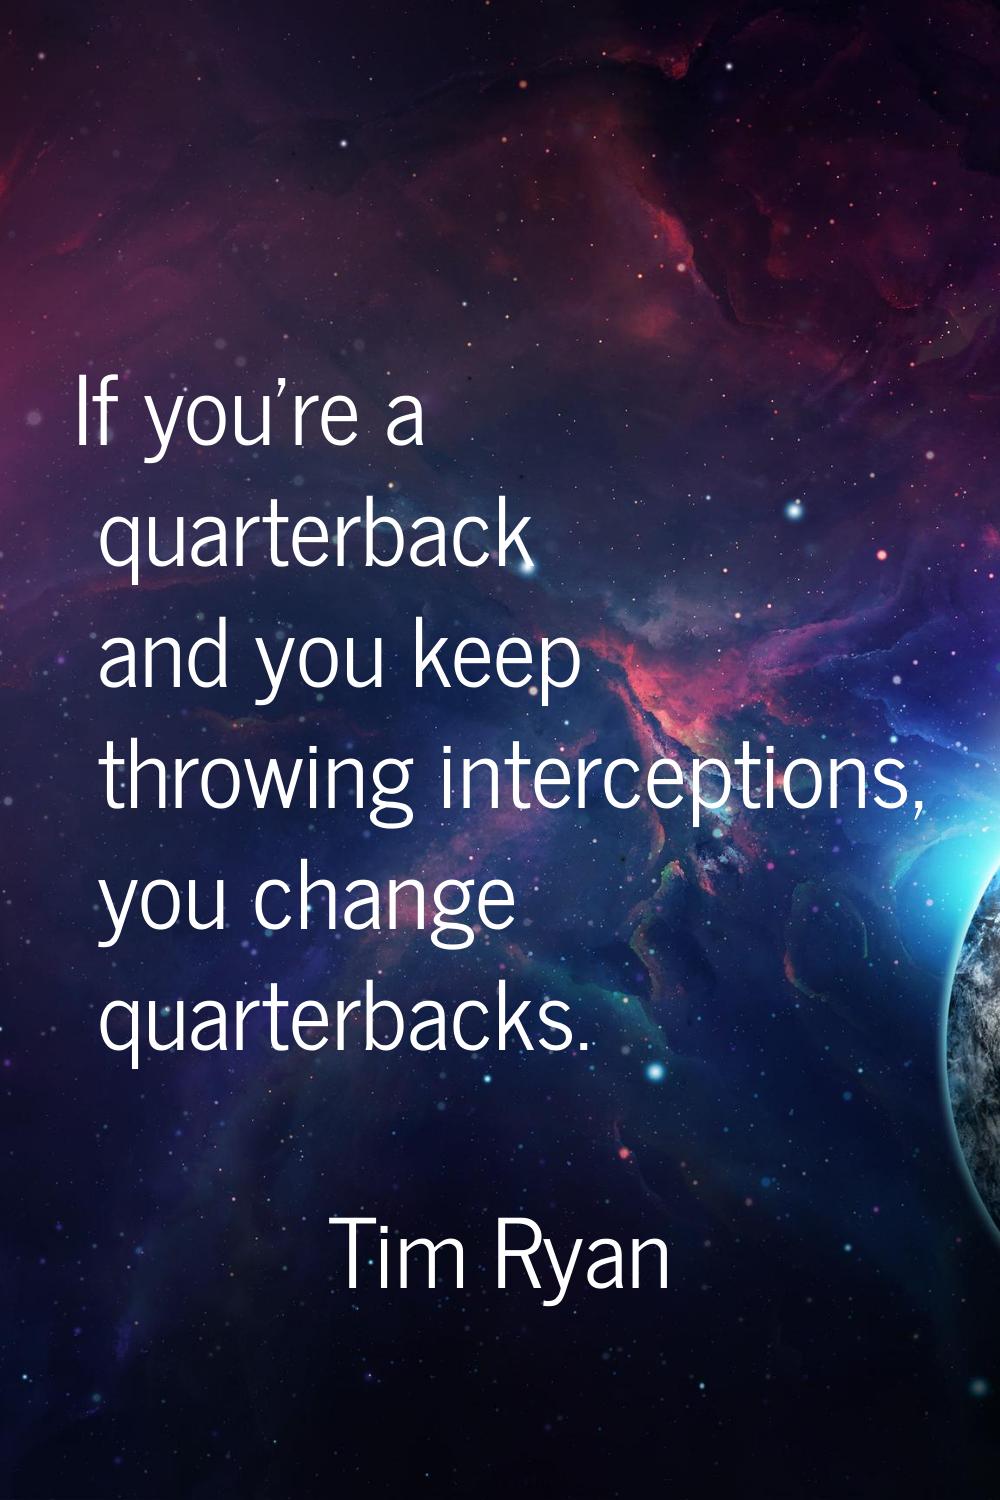 If you're a quarterback and you keep throwing interceptions, you change quarterbacks.